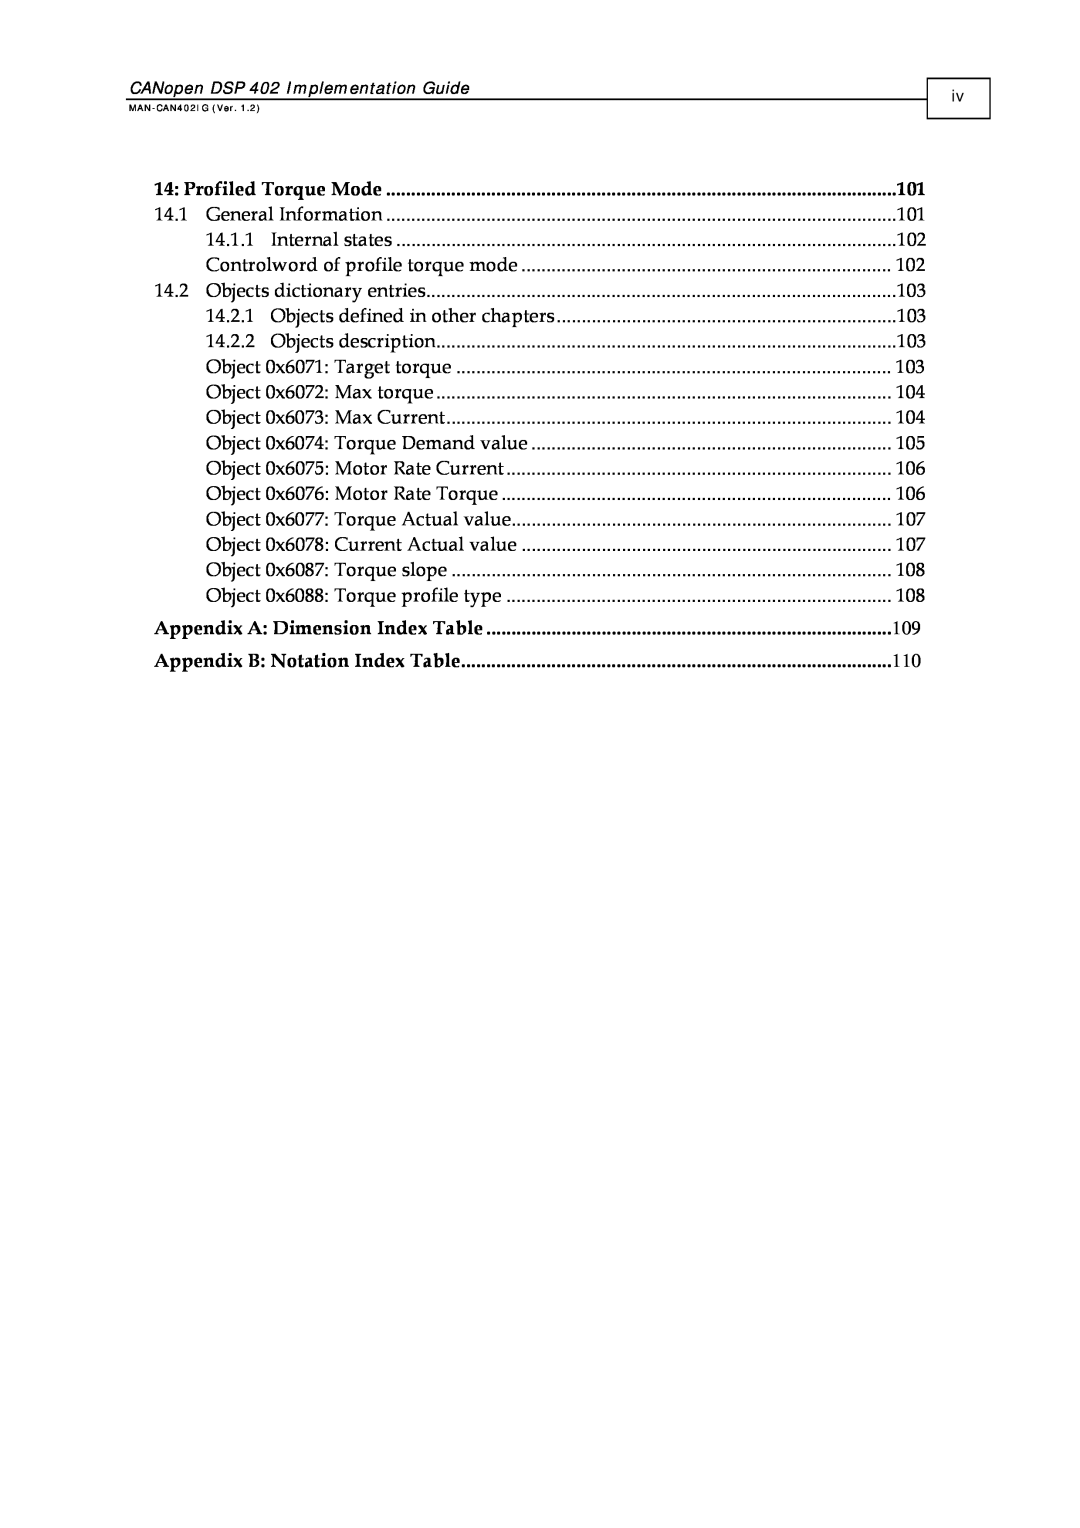 Elmo DSP 402 manual Profiled Torque Mode, Appendix A Dimension Index Table, Appendix B Notation Index Table 